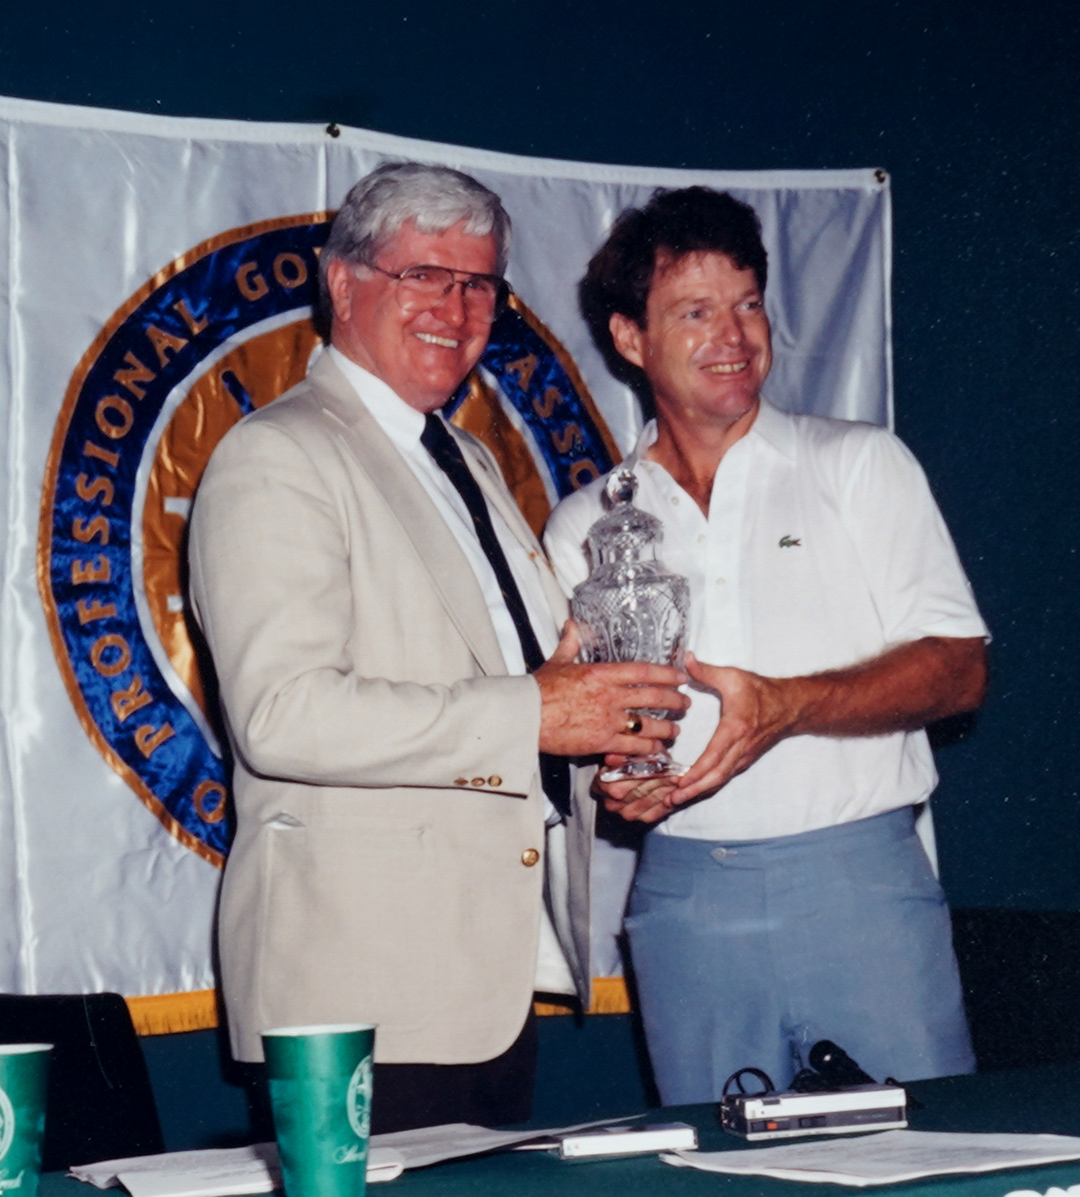 Tom Watson with Pat Rielly at the 1990 PGA Championship.